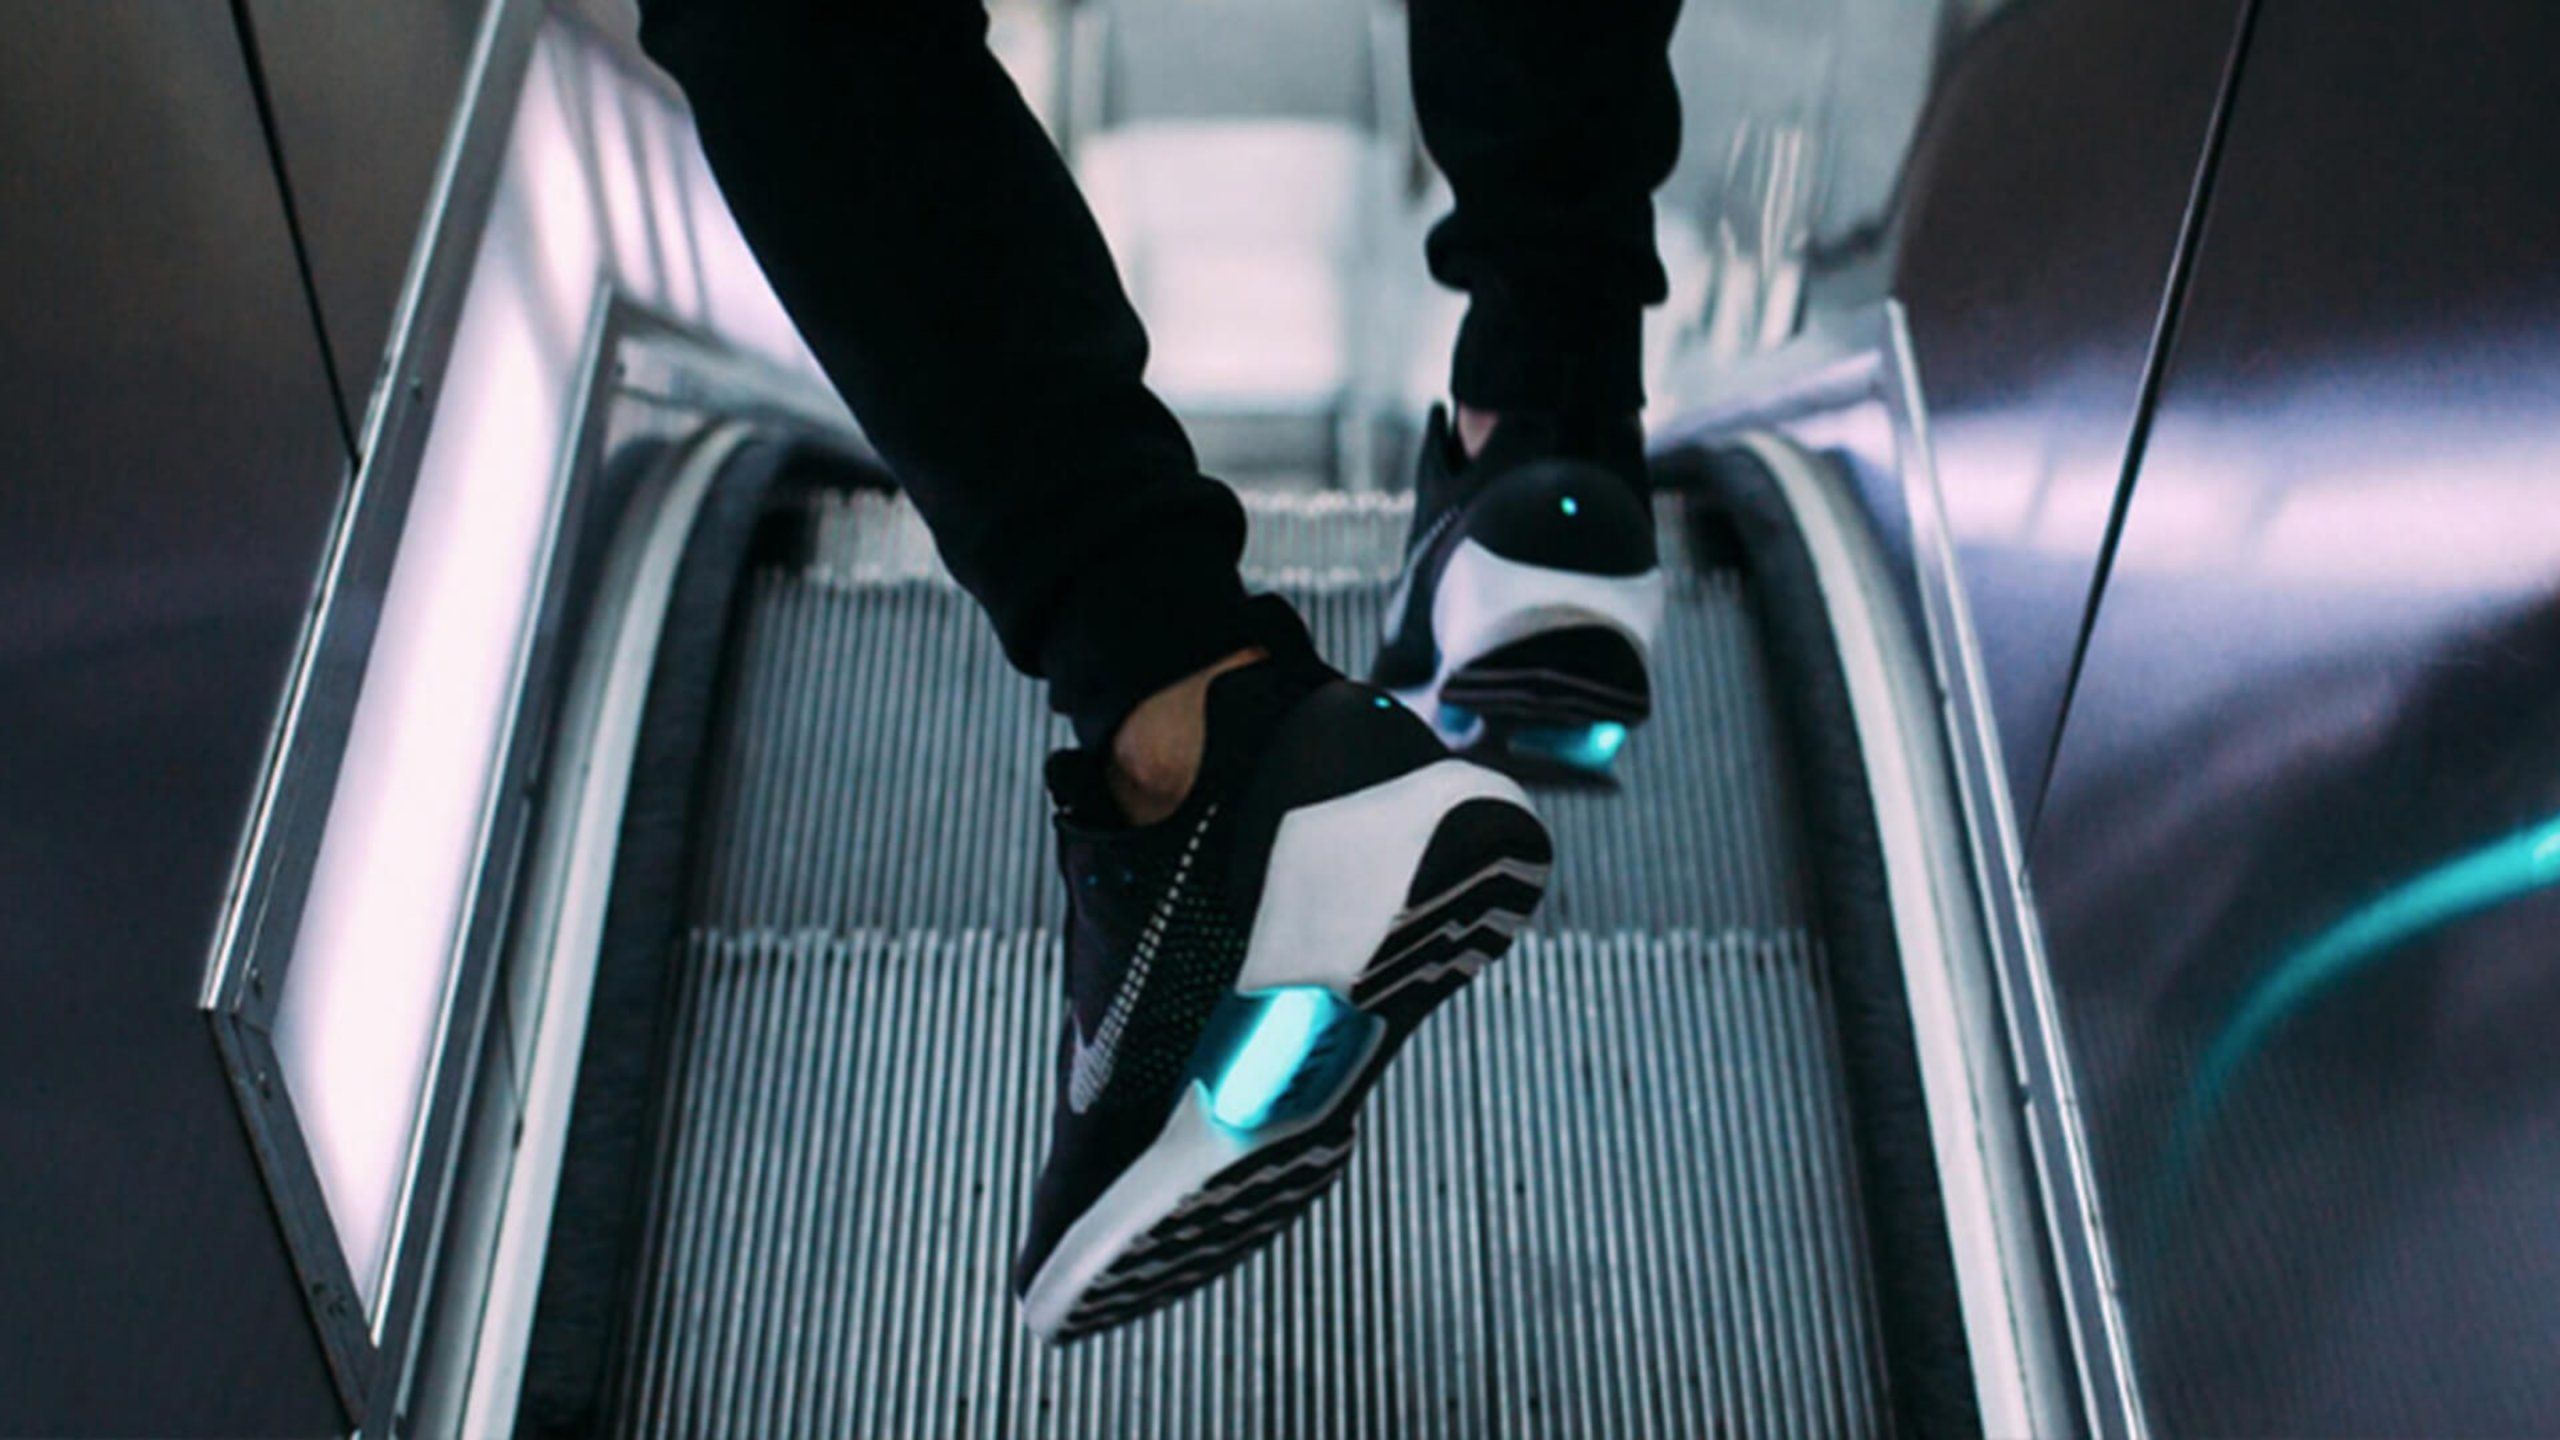 close up of feet wearing Nike Hyper Adapt sneakers starting to walk down escalator